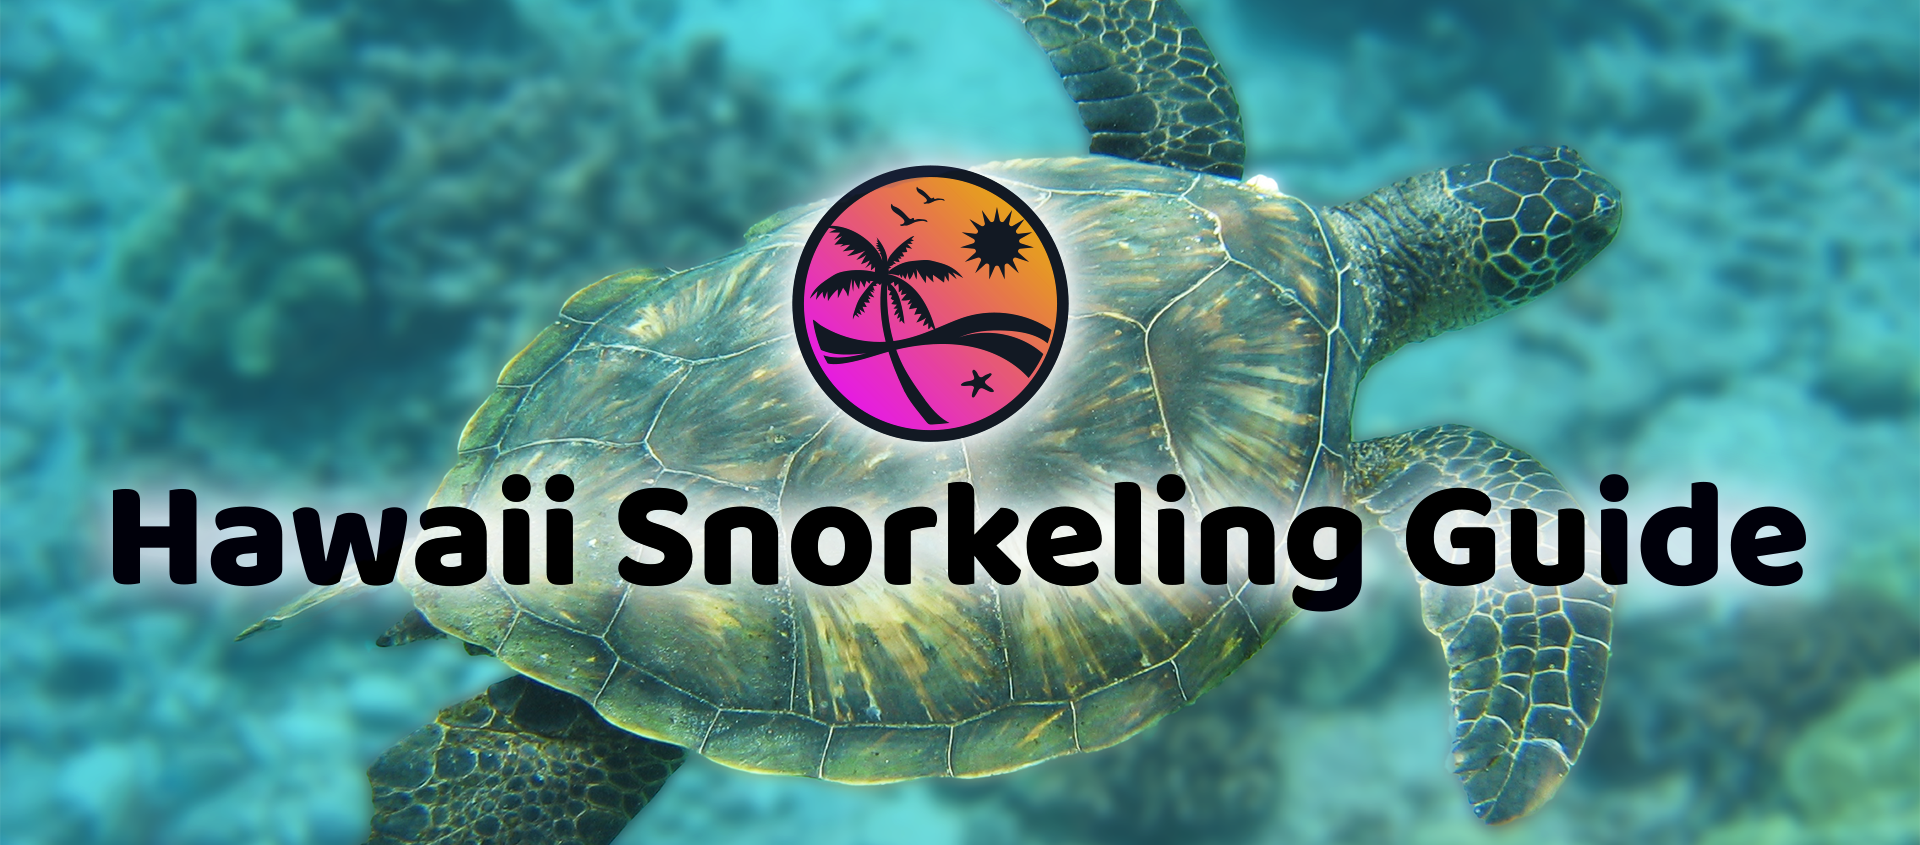 Hawaii Snorkeling Guide